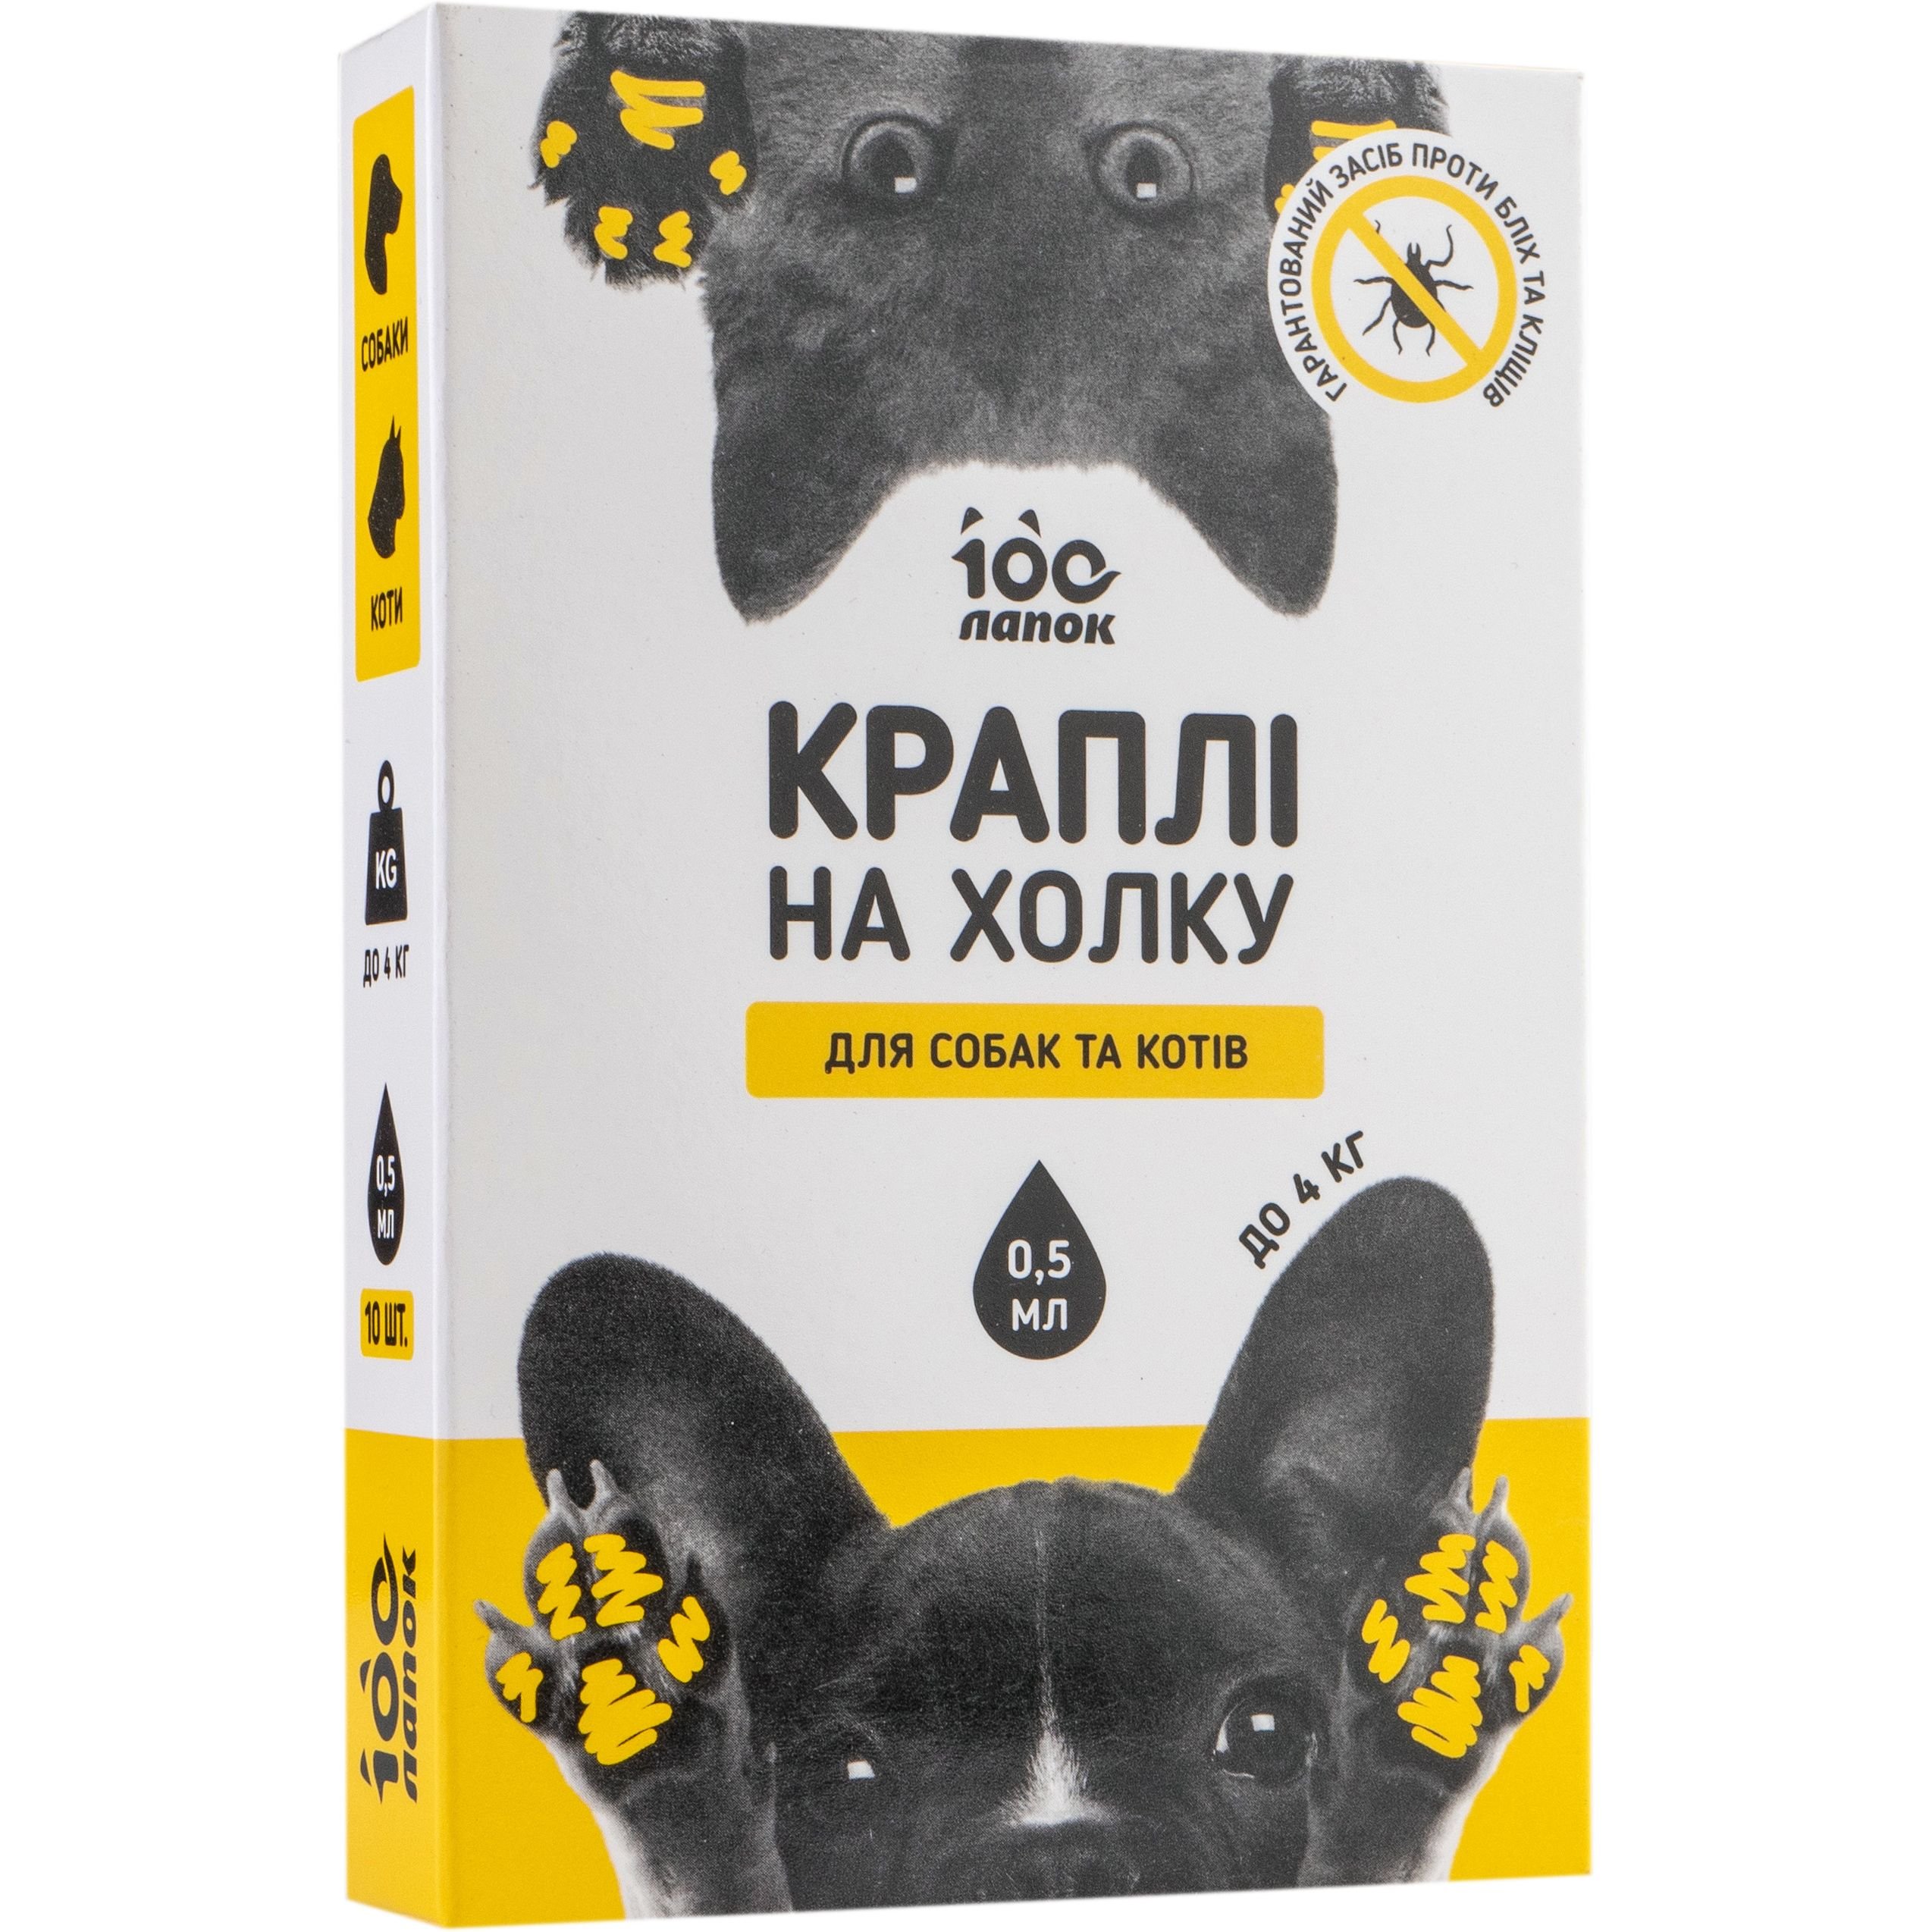 Капли на холку Vitomax 100 Лапок противопаразитарные для кошек и собак 0.5-4 кг, 0.5 мл, 10 пипеток - фото 1